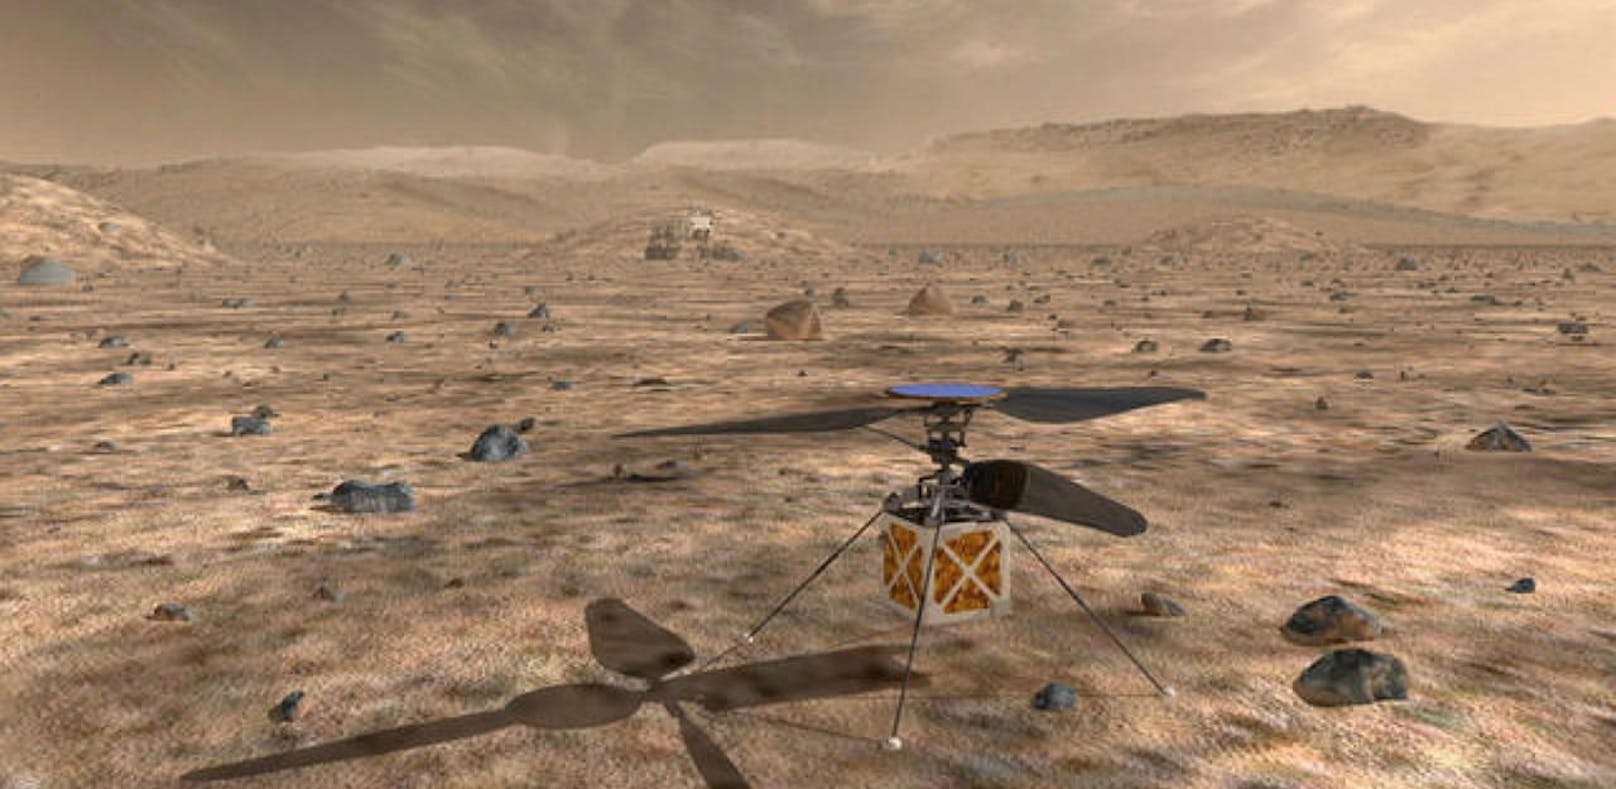 Ein Helikopter soll den Mars erkunden